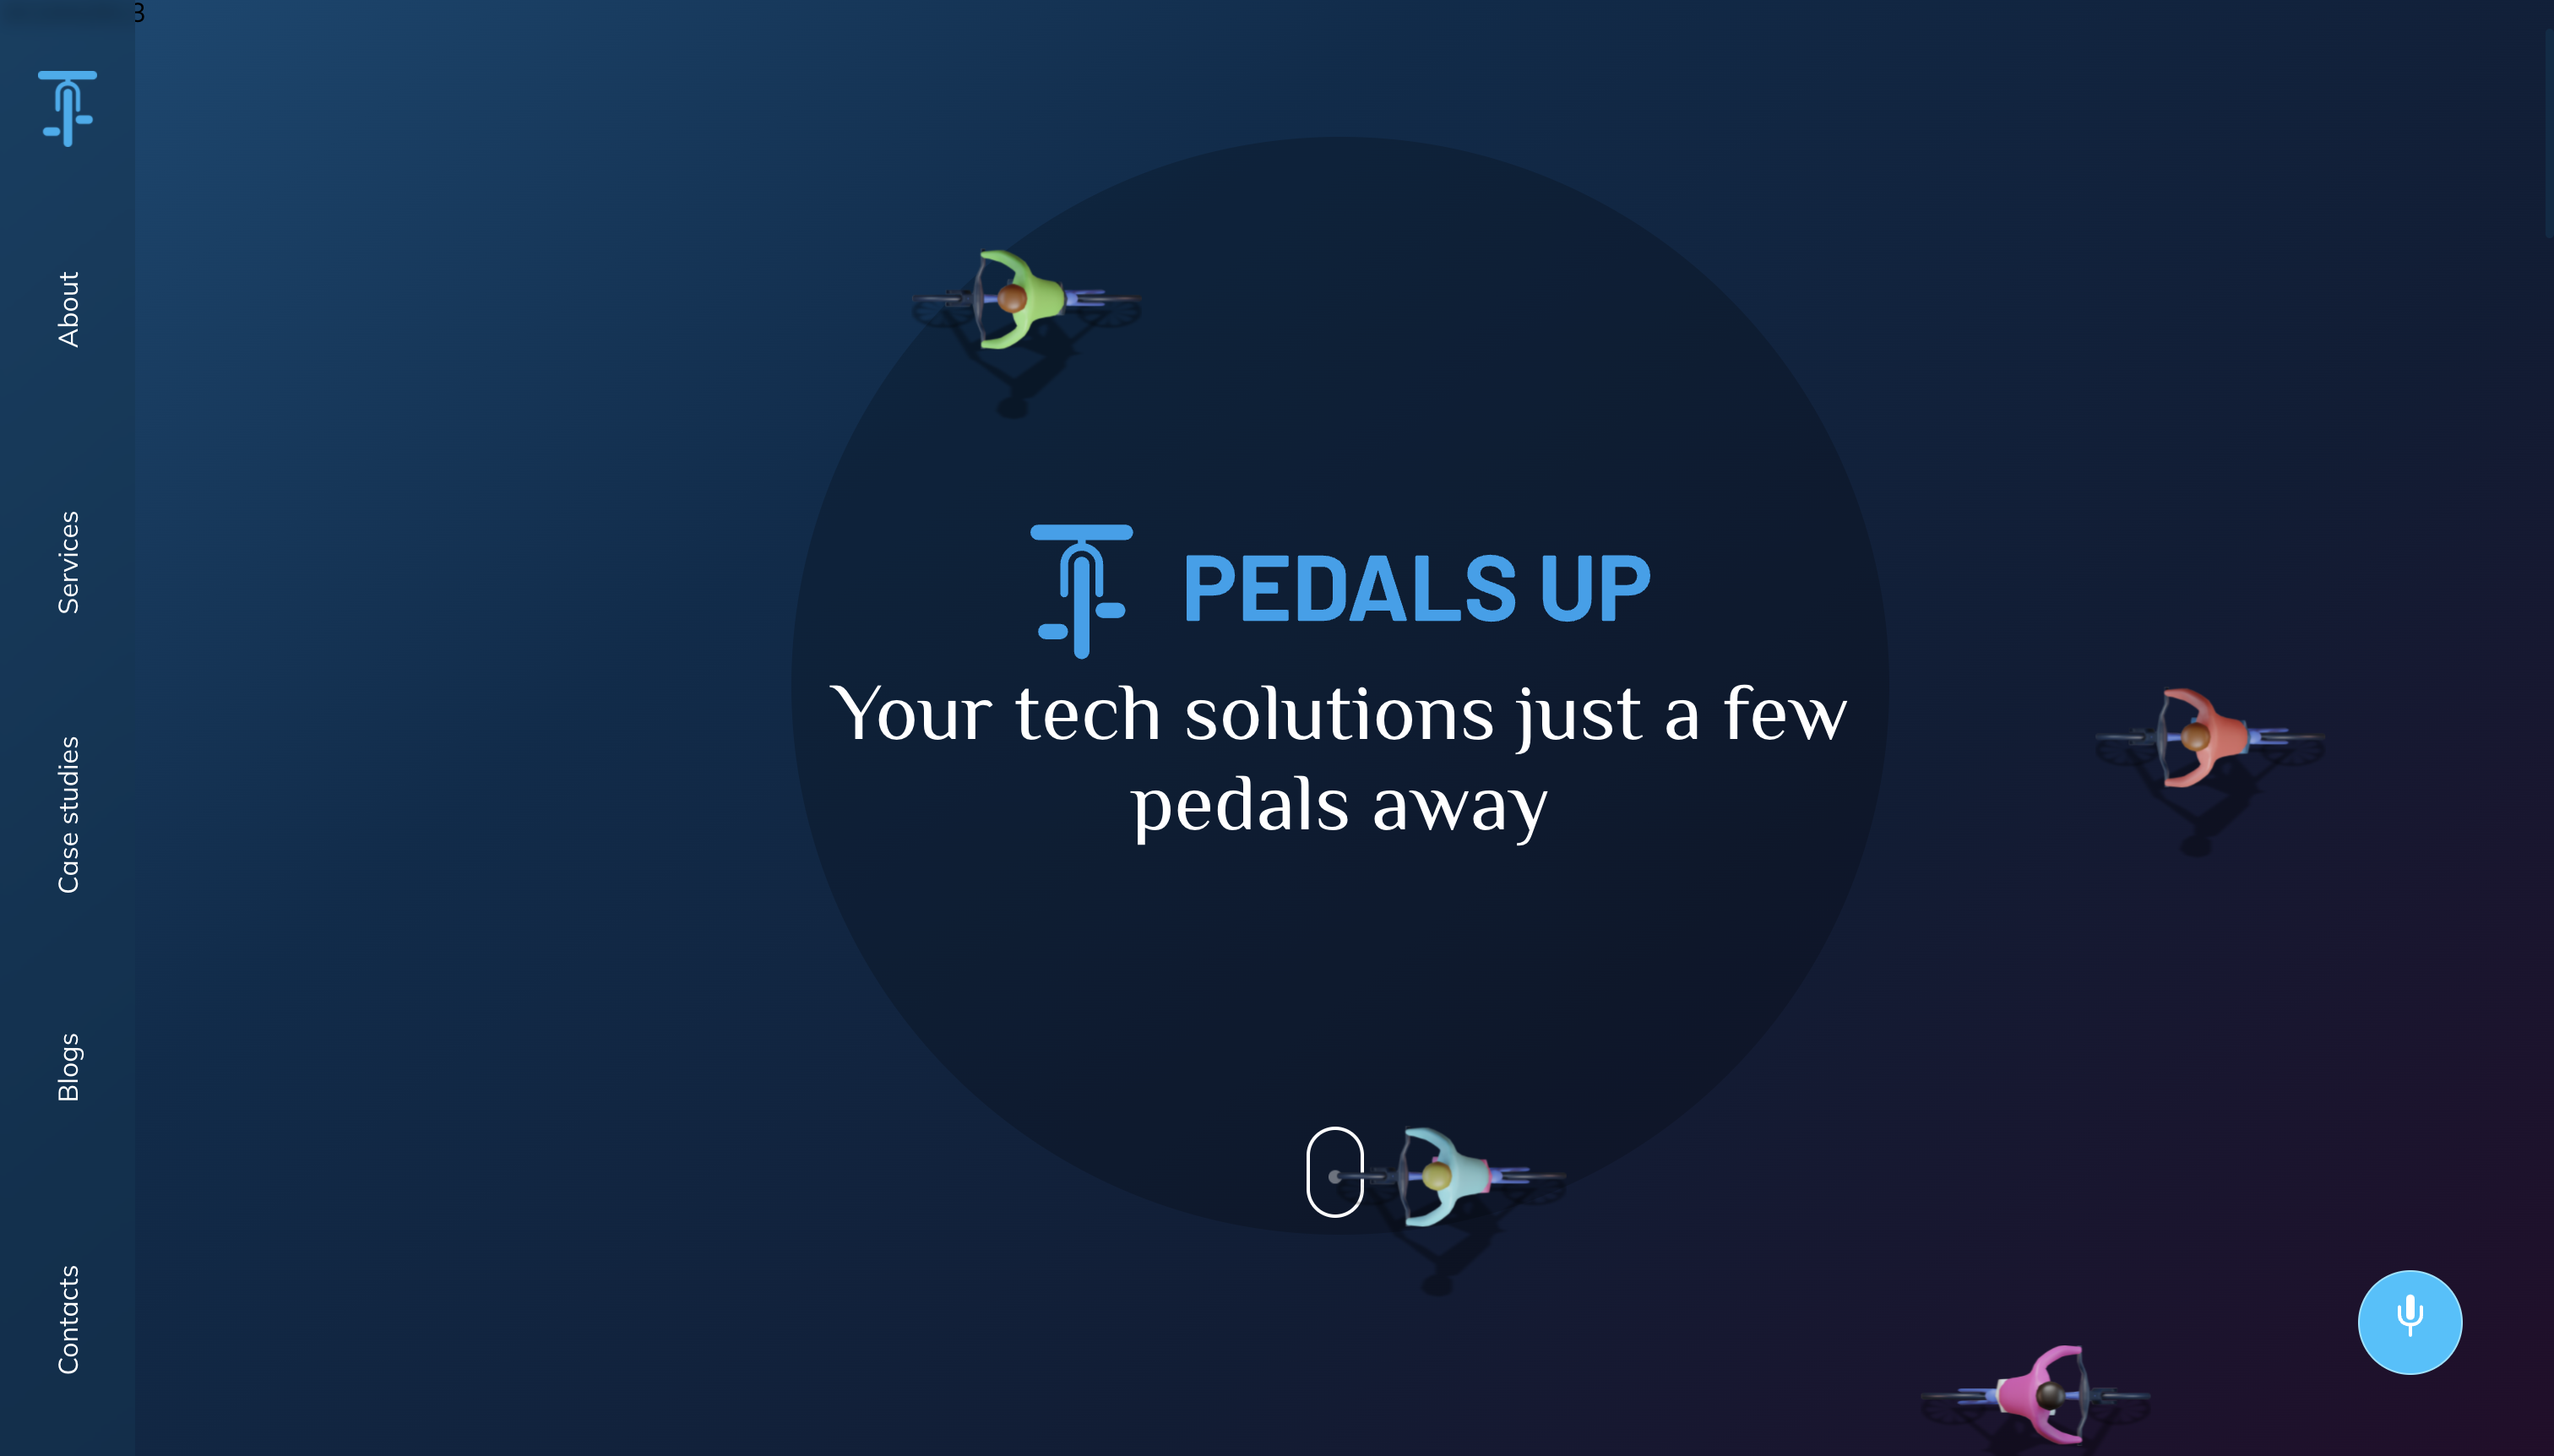 Pedals Up ins image 3D